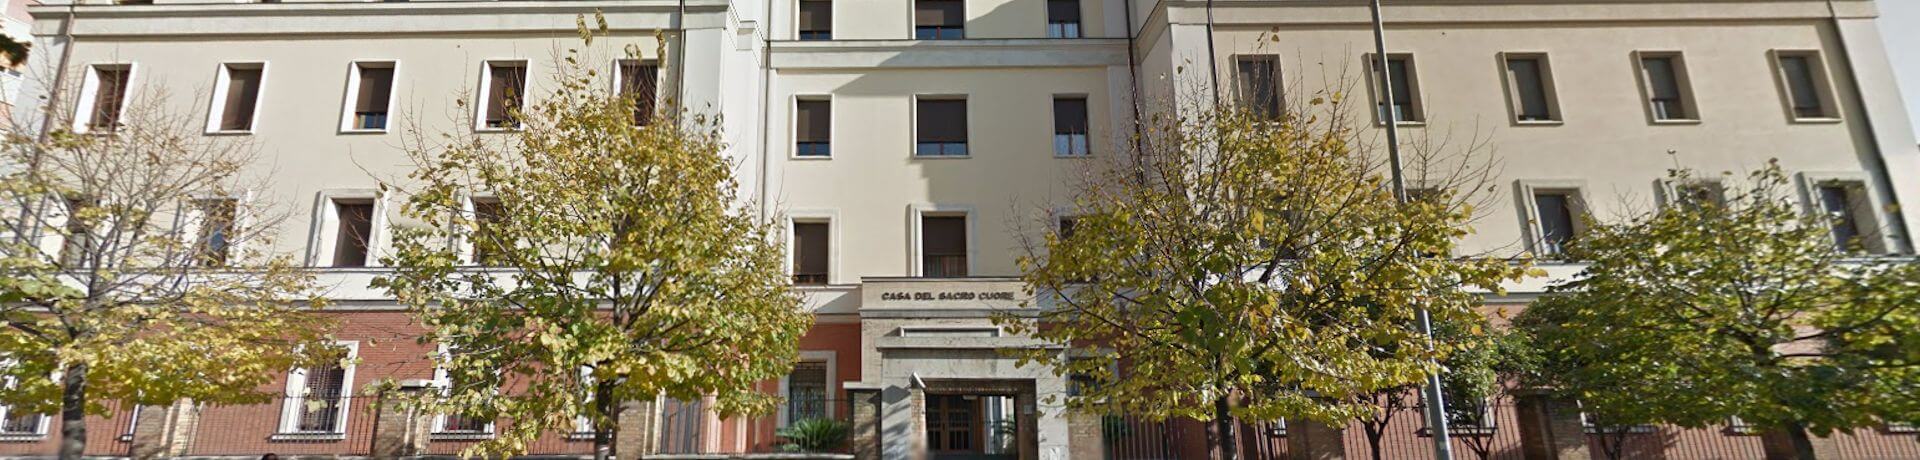 Istituto Sacro Cuore Roma Scuola Sacro Cuore - Ingresso